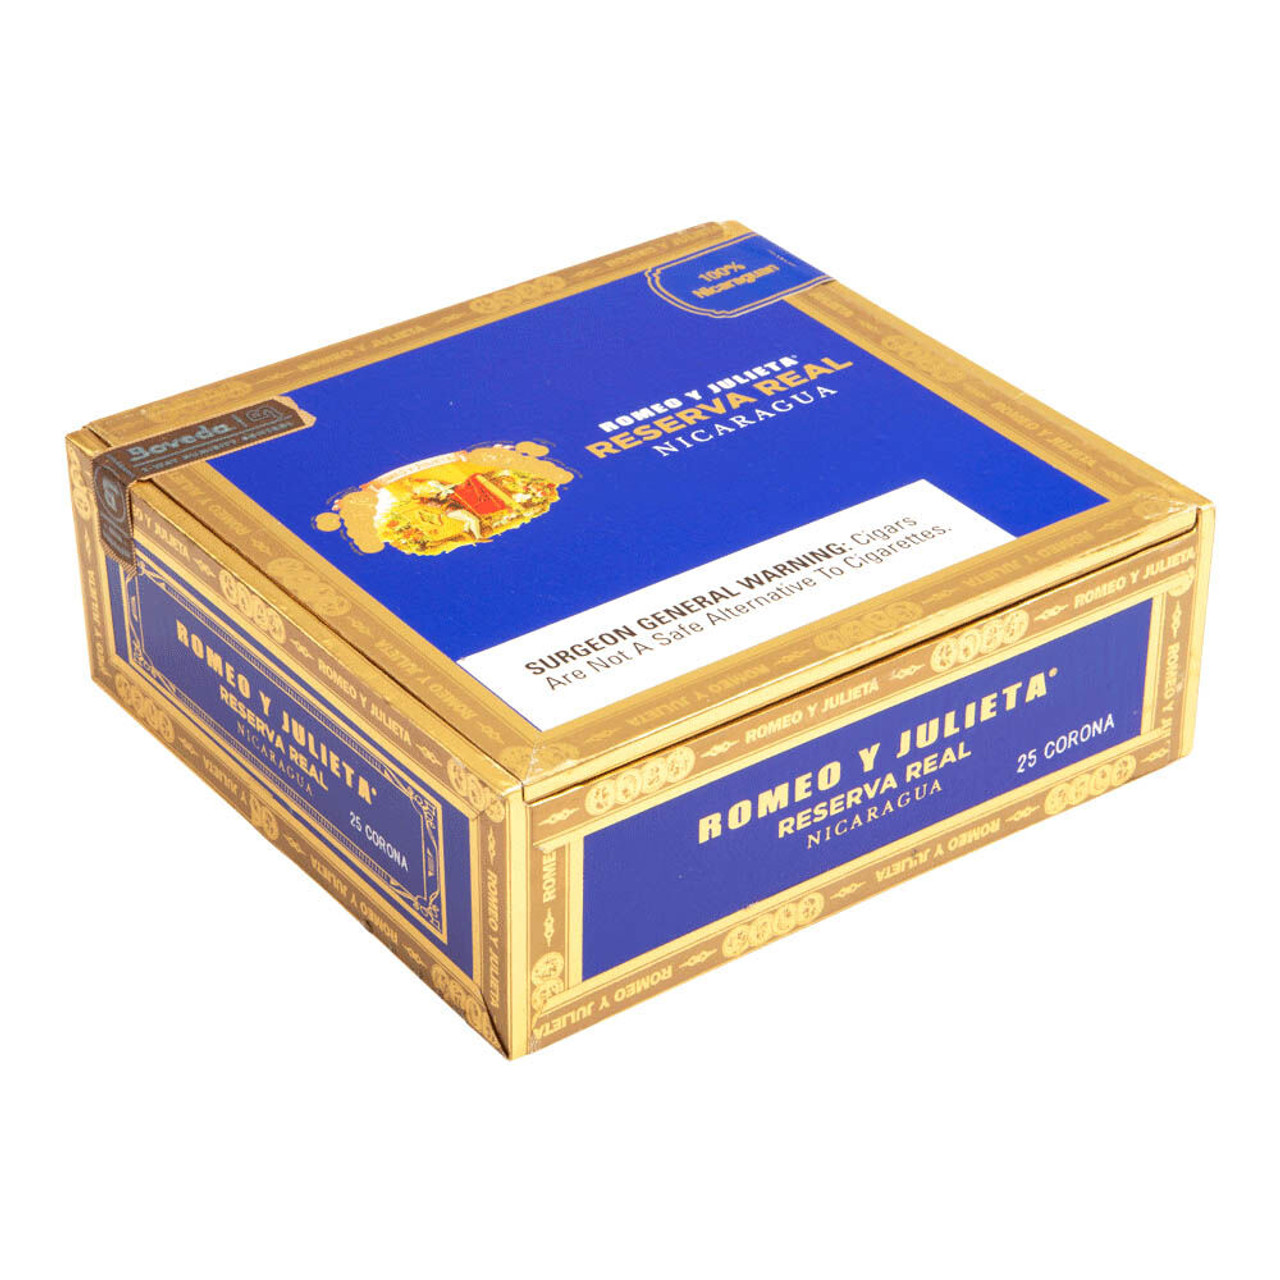 Romeo y Julieta Reserva Real Nicaragua Corona Cigars - 5.5 x 44 (Box of 25) *Box